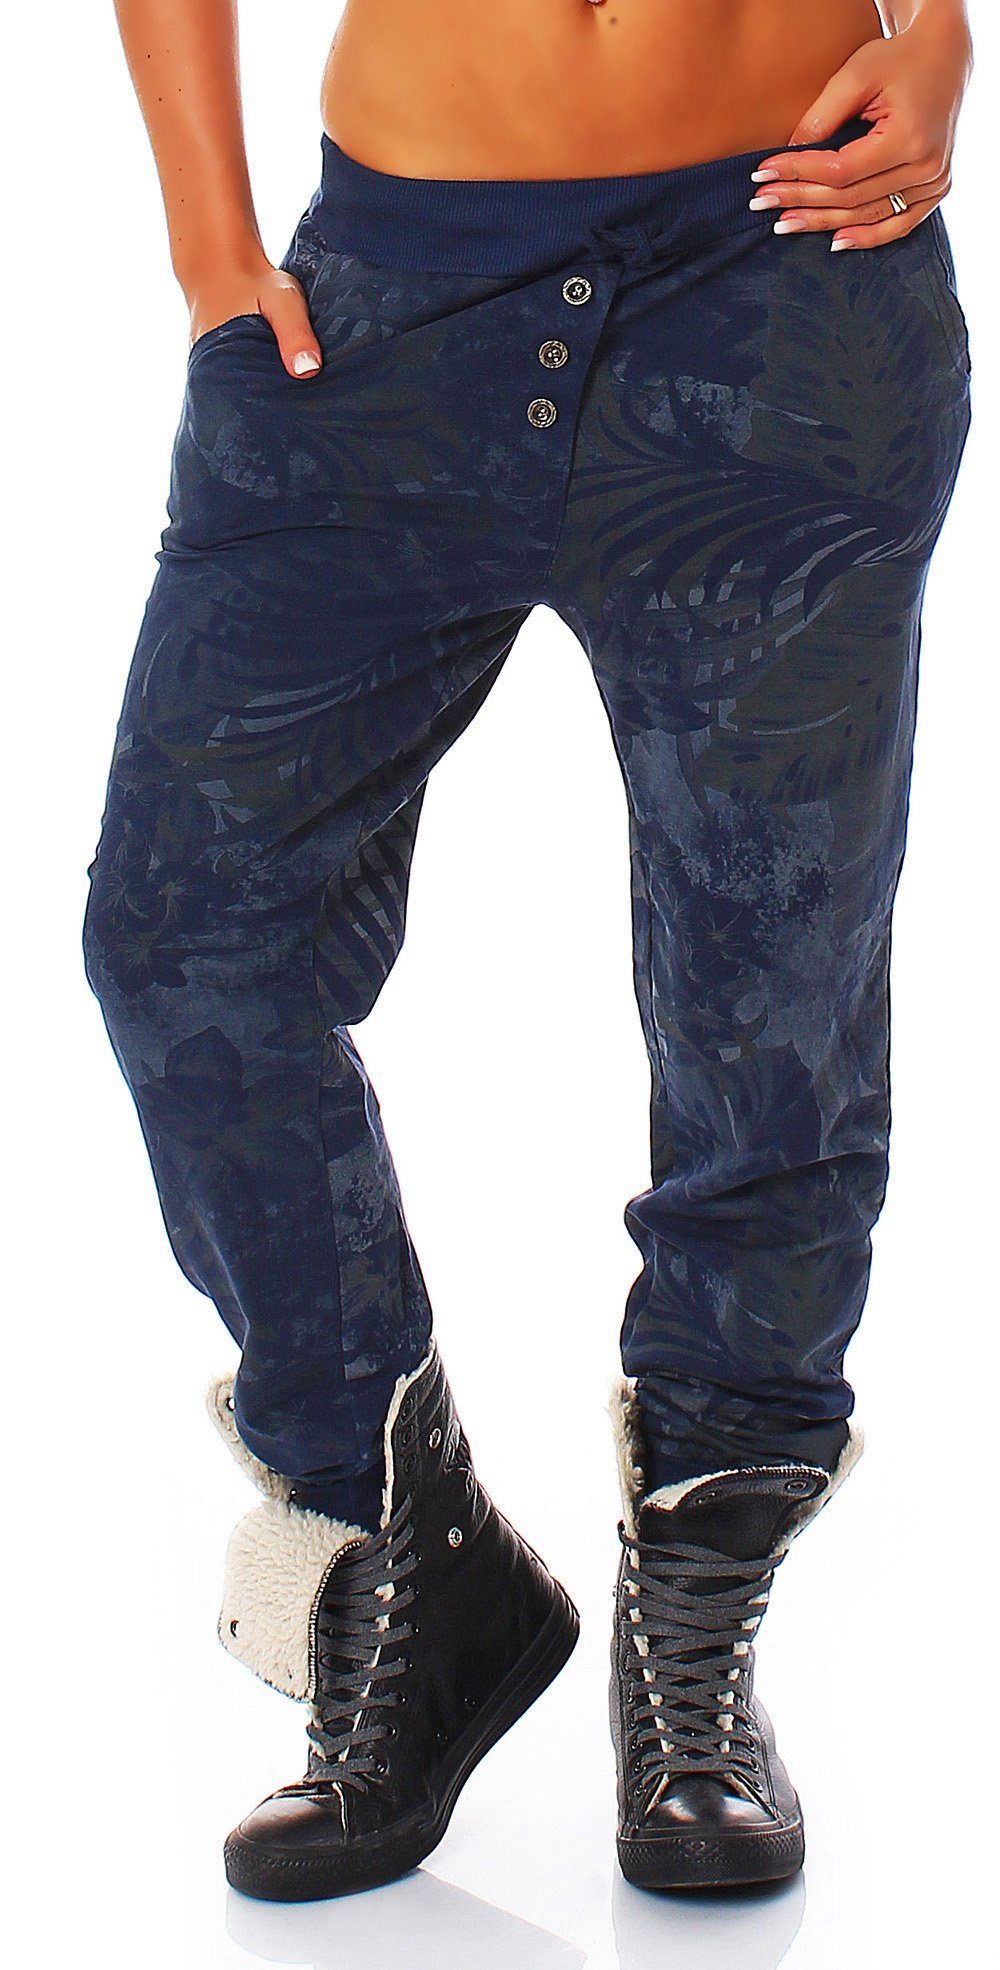 malito more than fashion Jogginghose 83728 Sweatpants mit Jungelprint dunkelblau